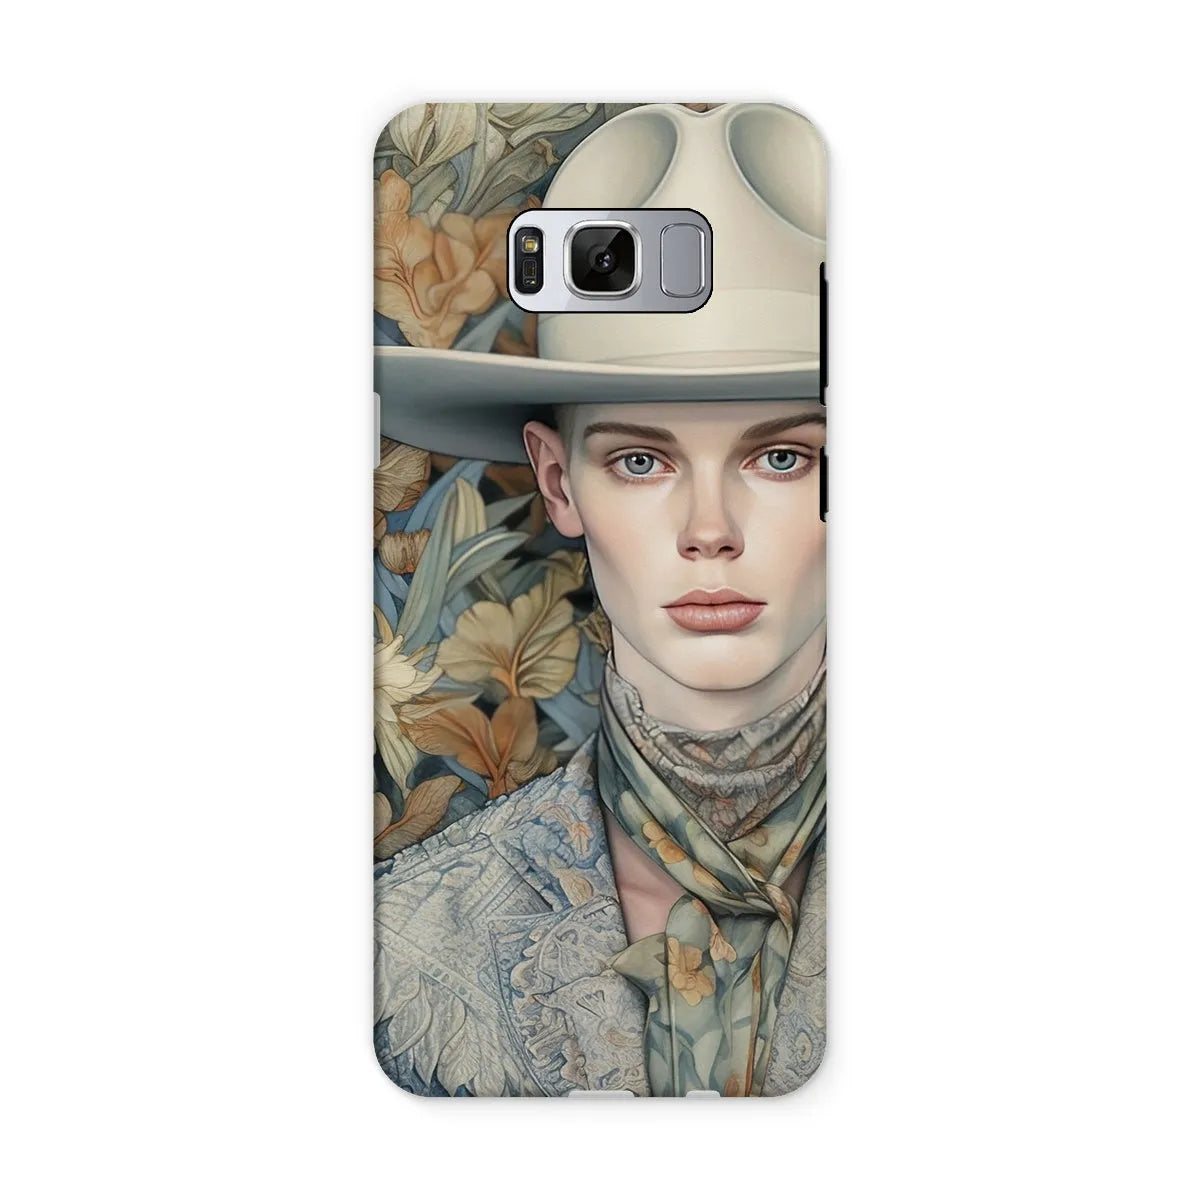 Jasper - Dandy Twink Cowboy Aesthetic Art Phone Case - Samsung Galaxy S8 / Matte - Mobile Phone Cases - Aesthetic Art